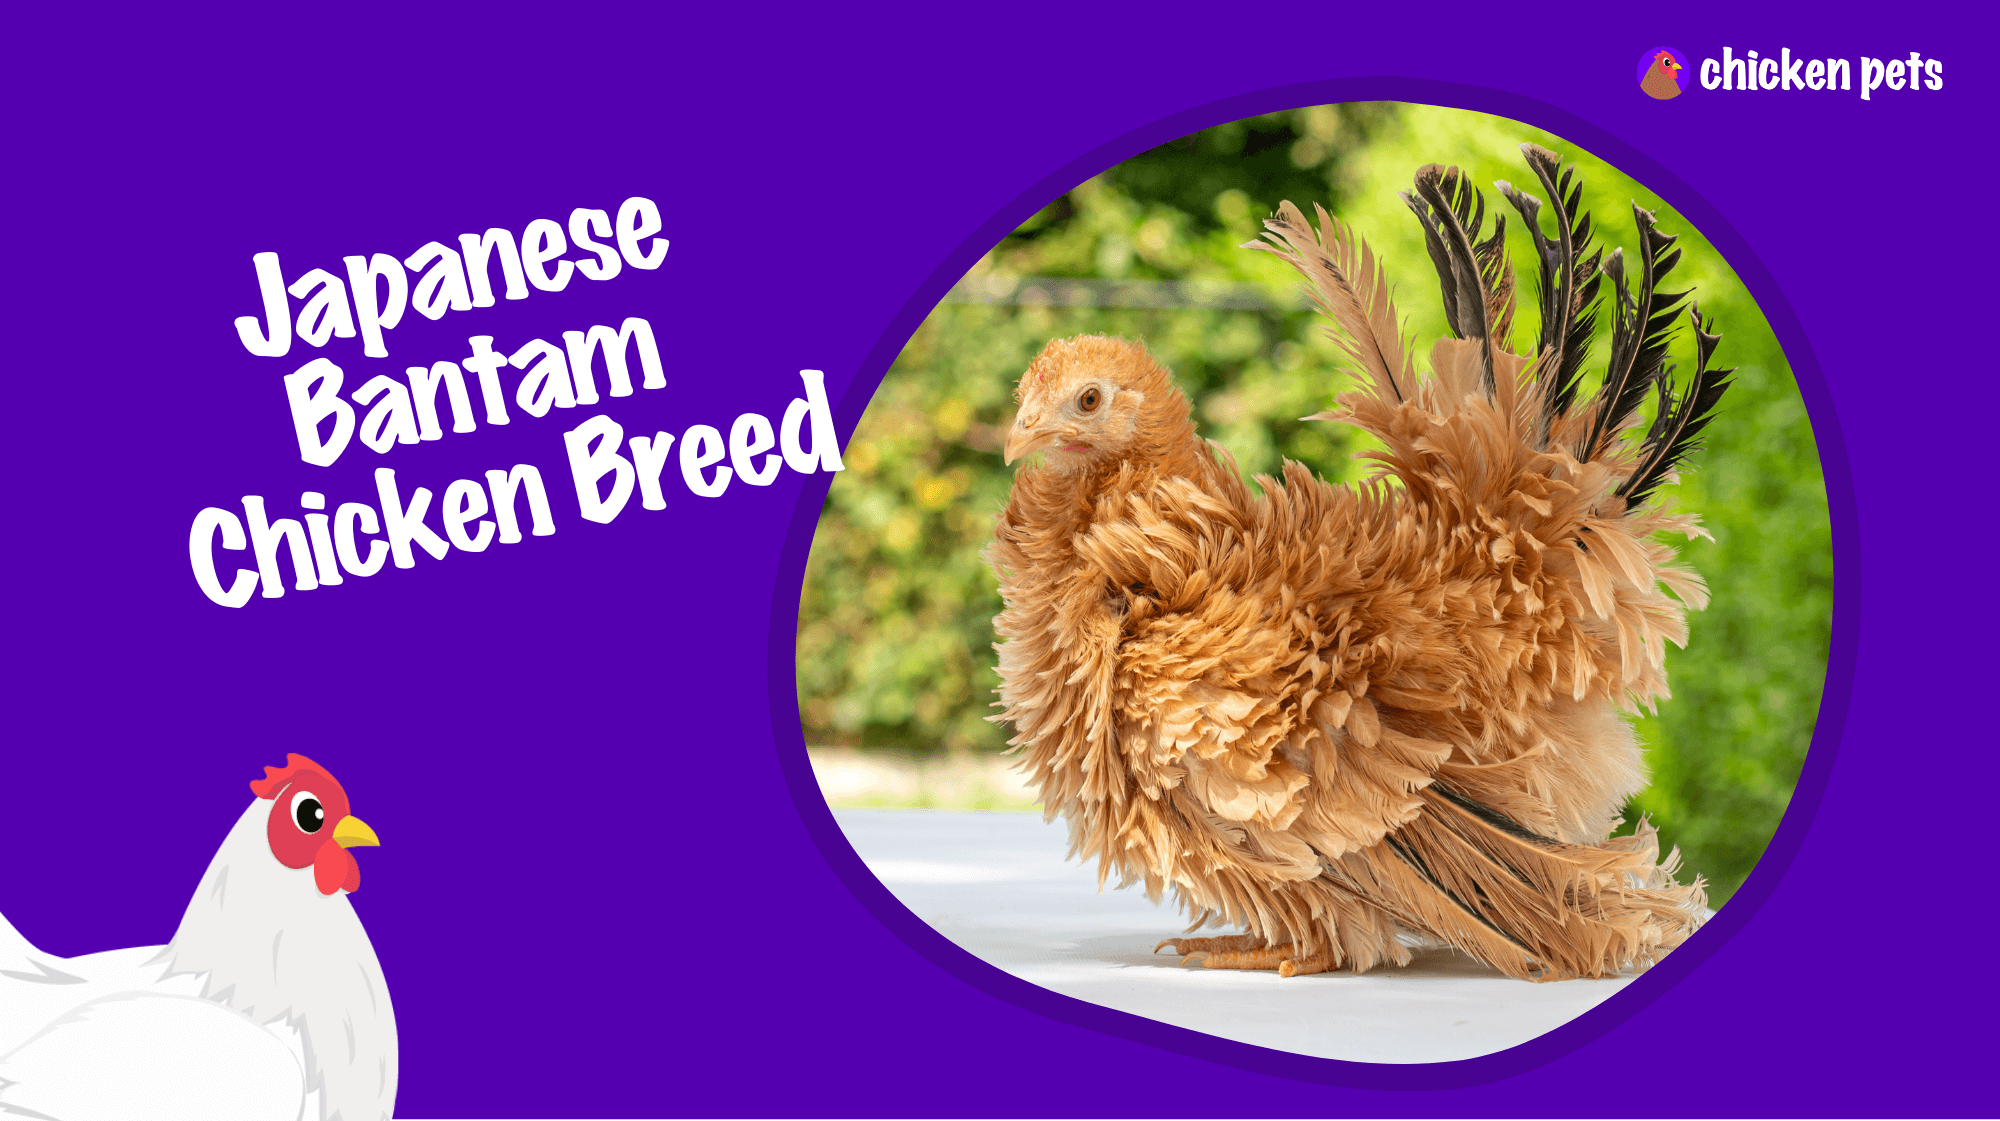 Japanese Bantam chicken breed